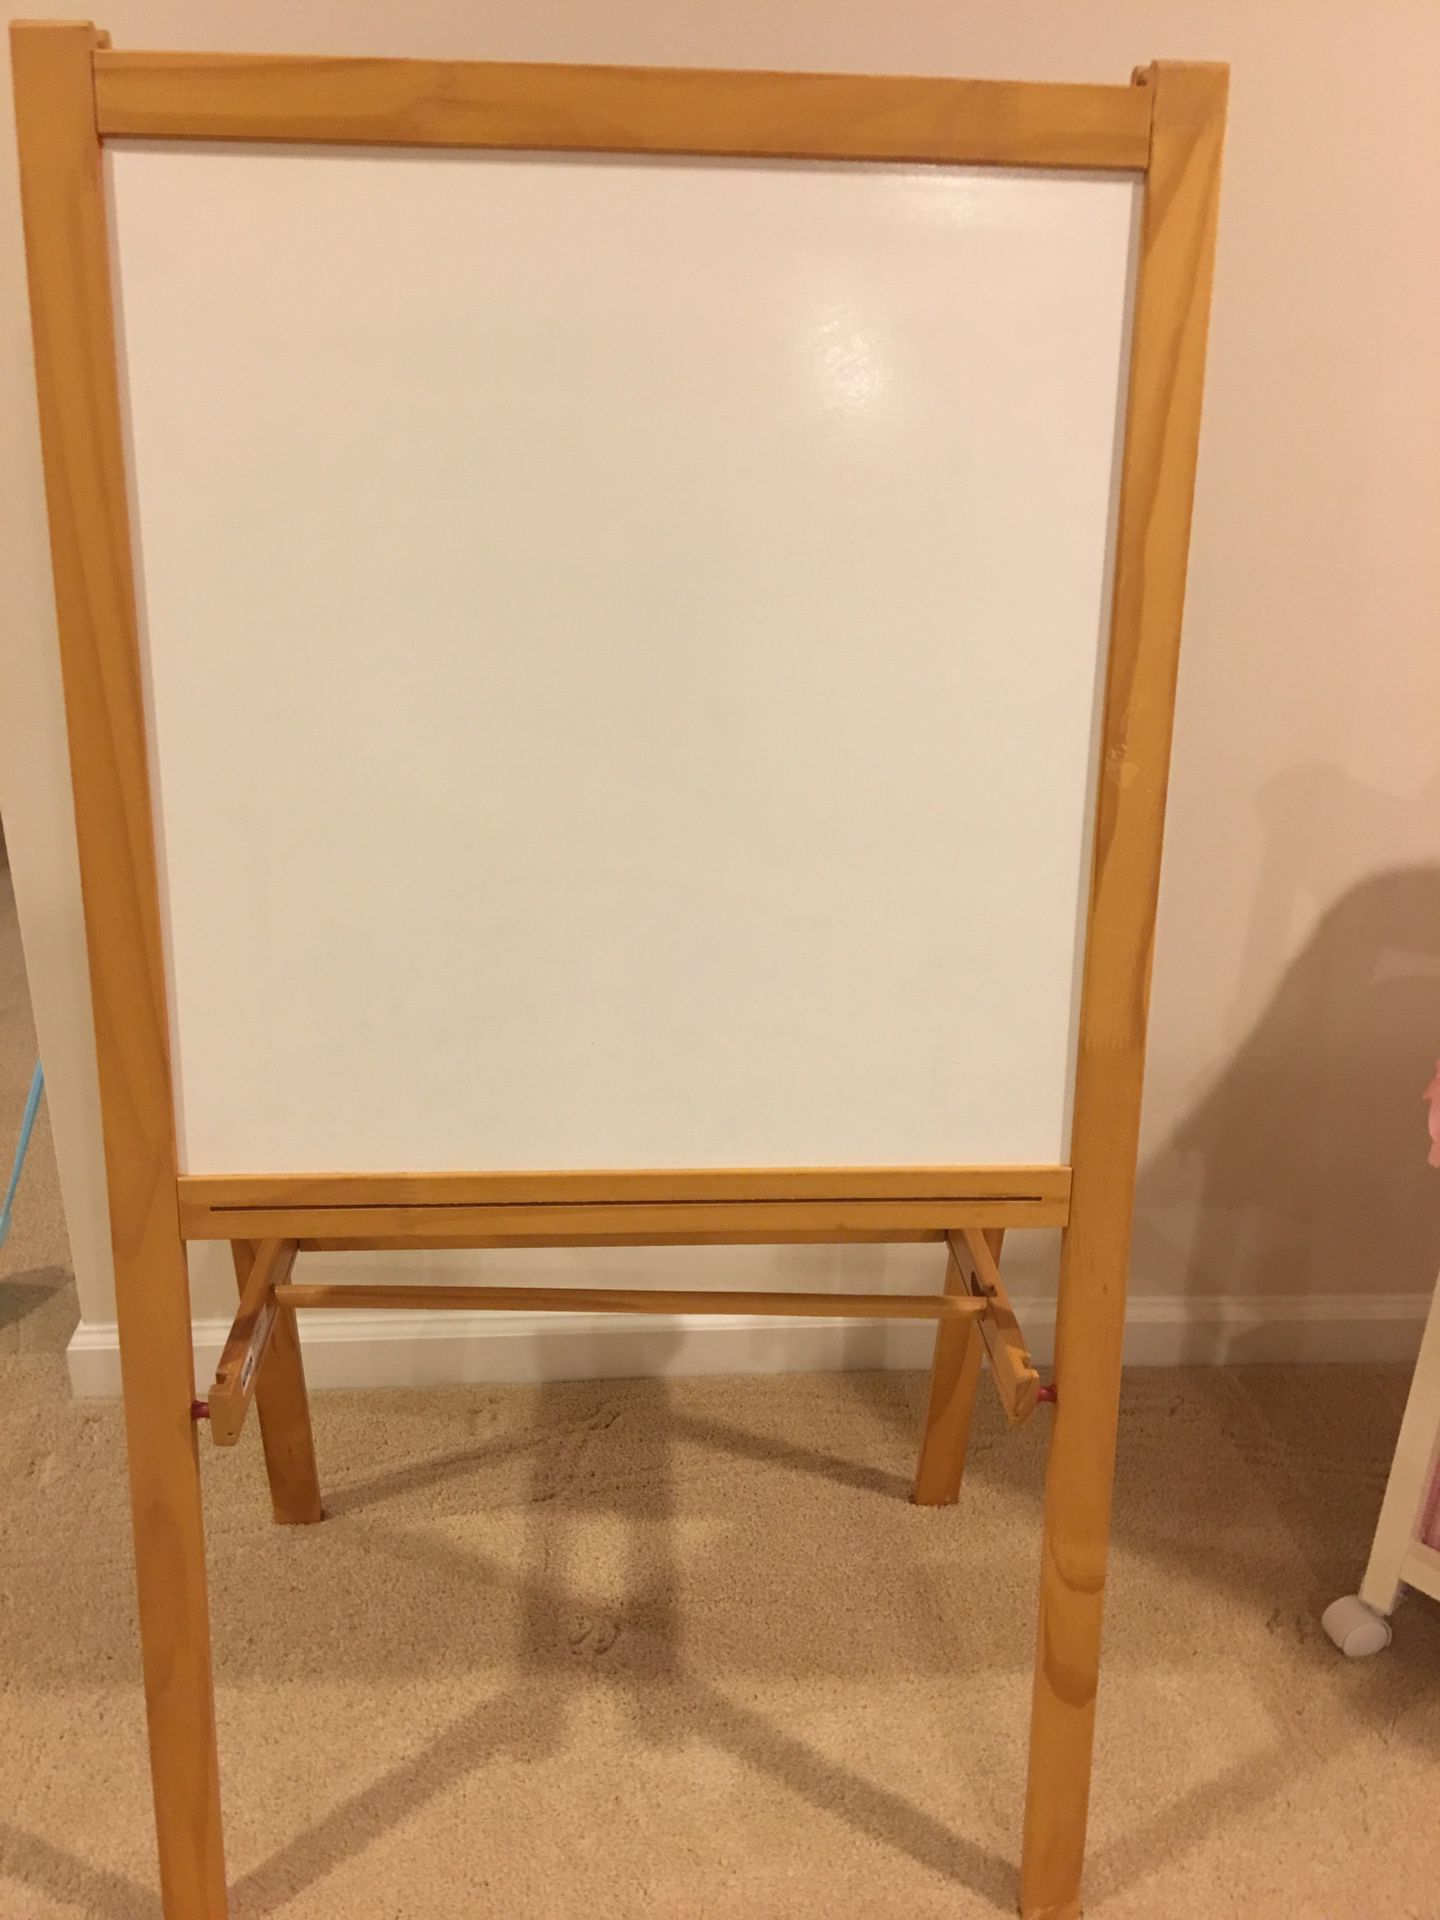 Whiteboard and chalkboard easel